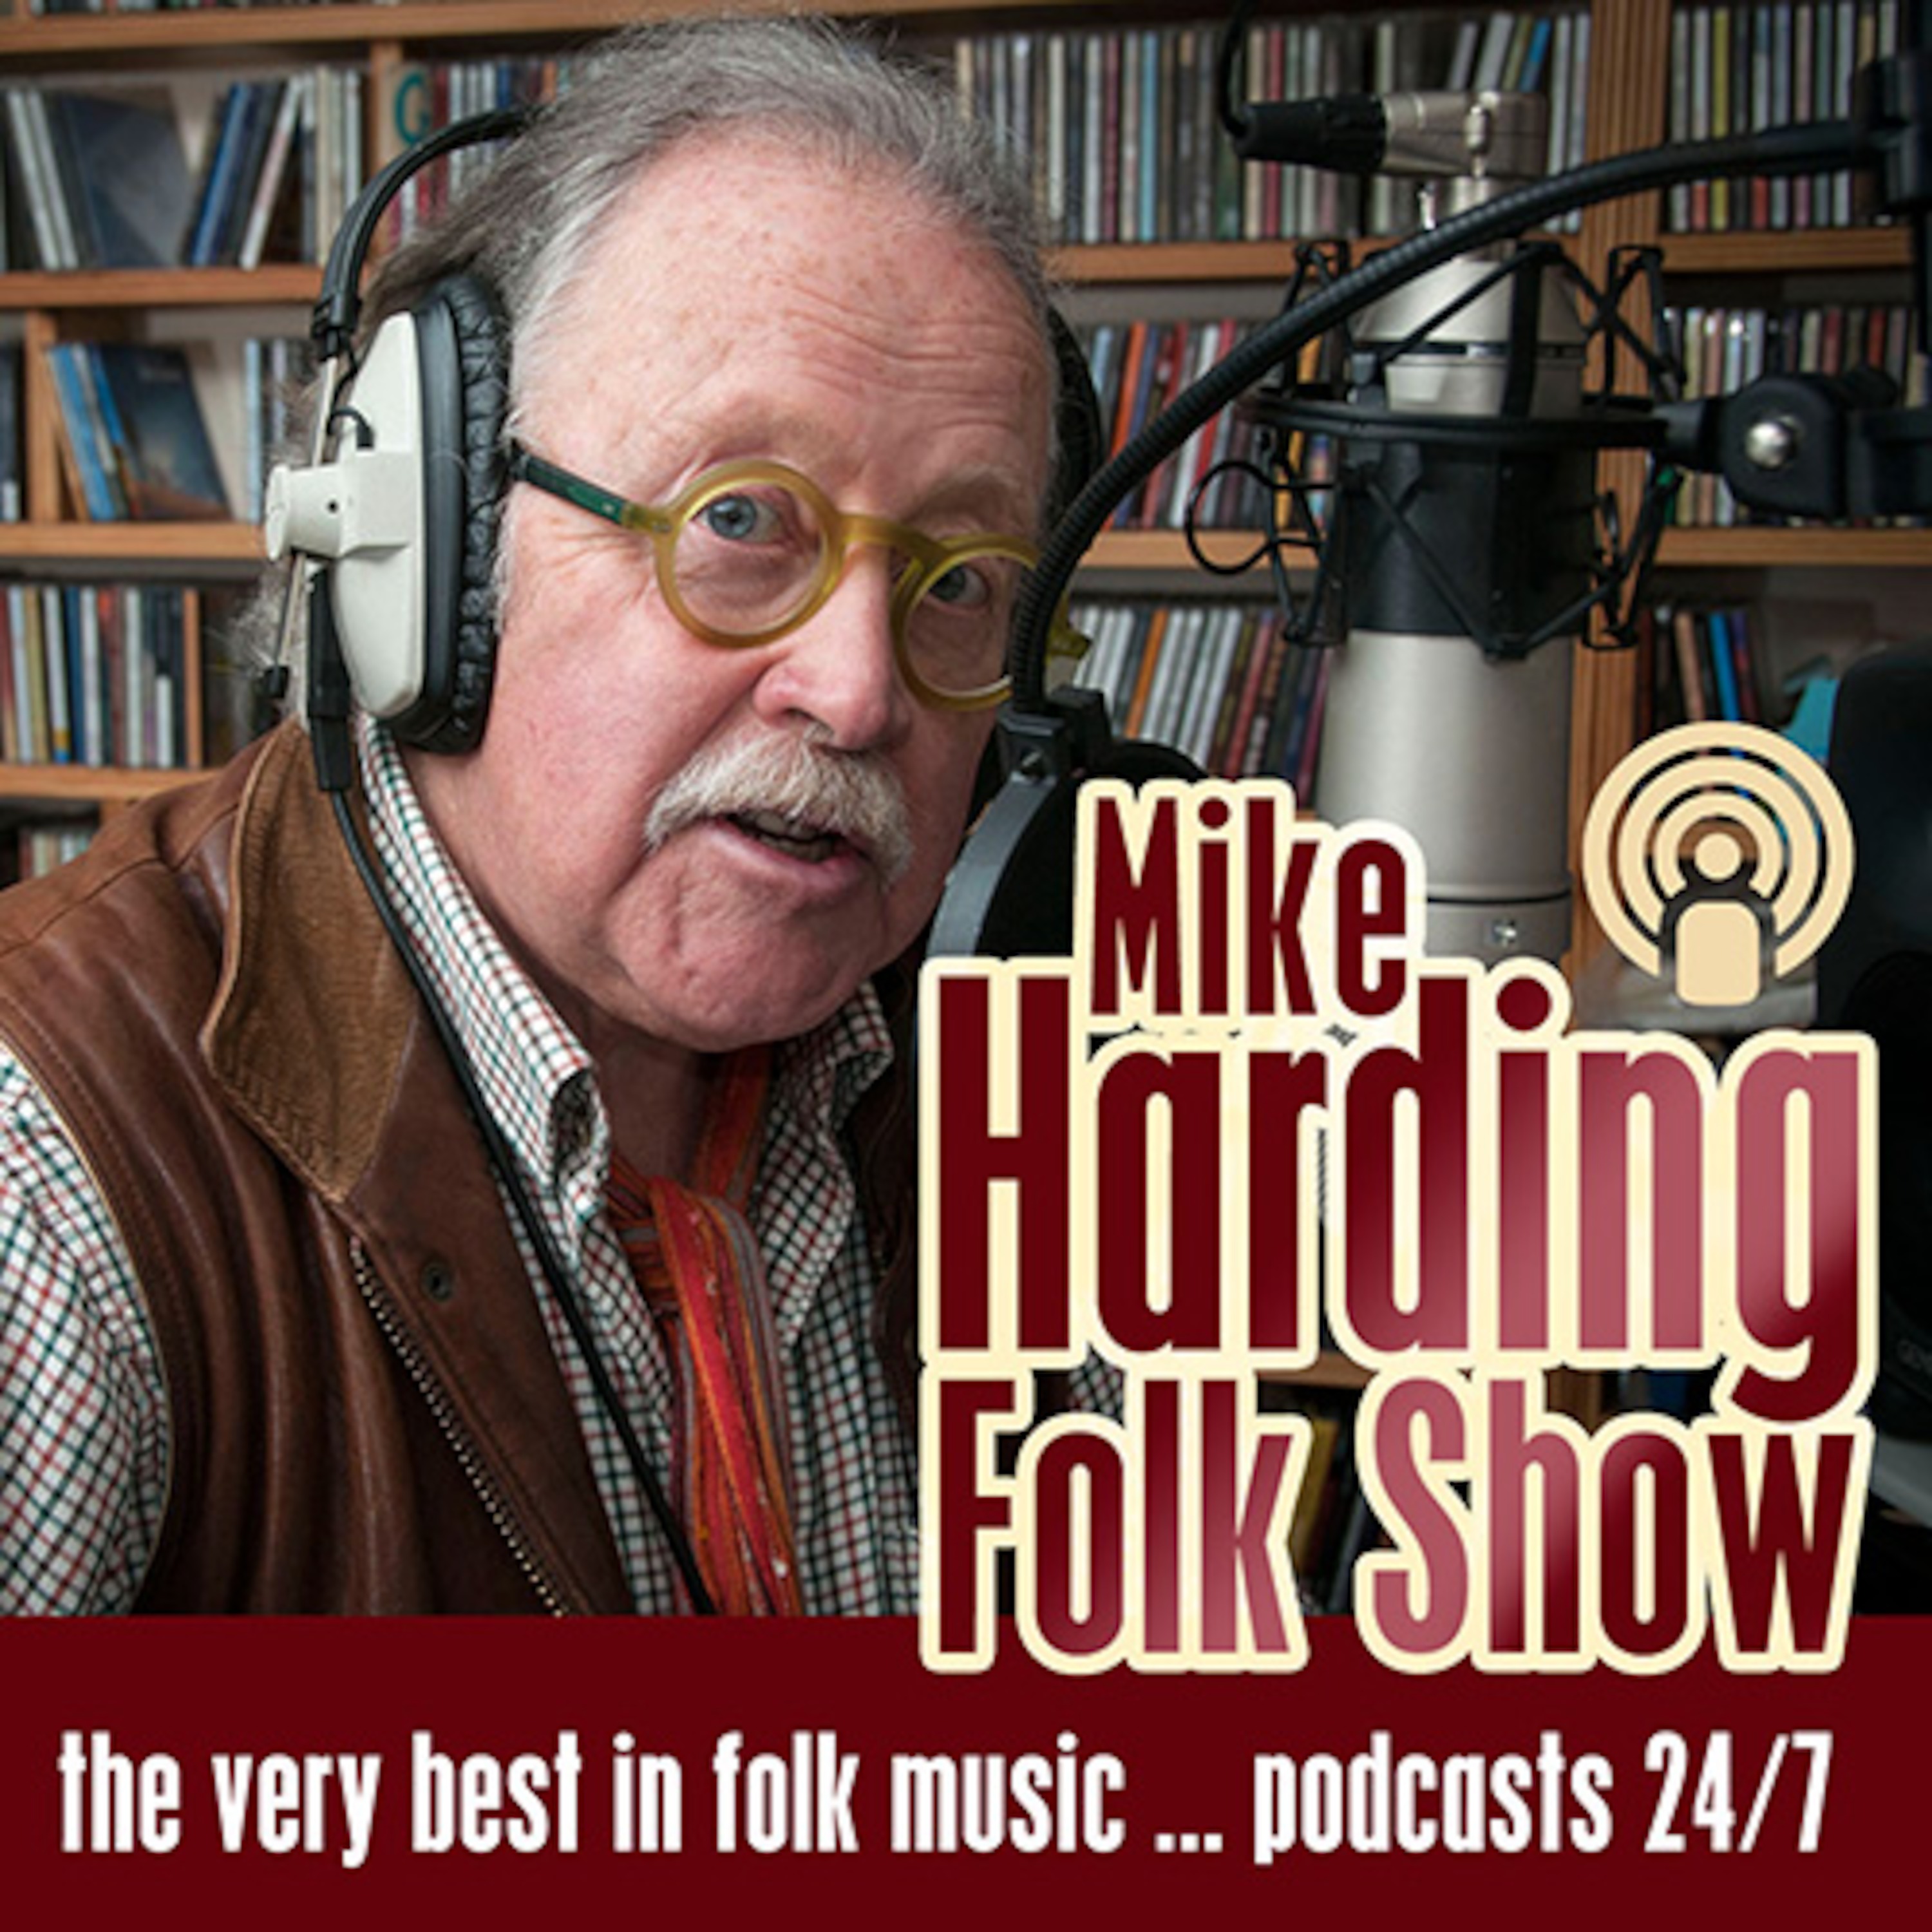 Mike Harding Folk Show 05